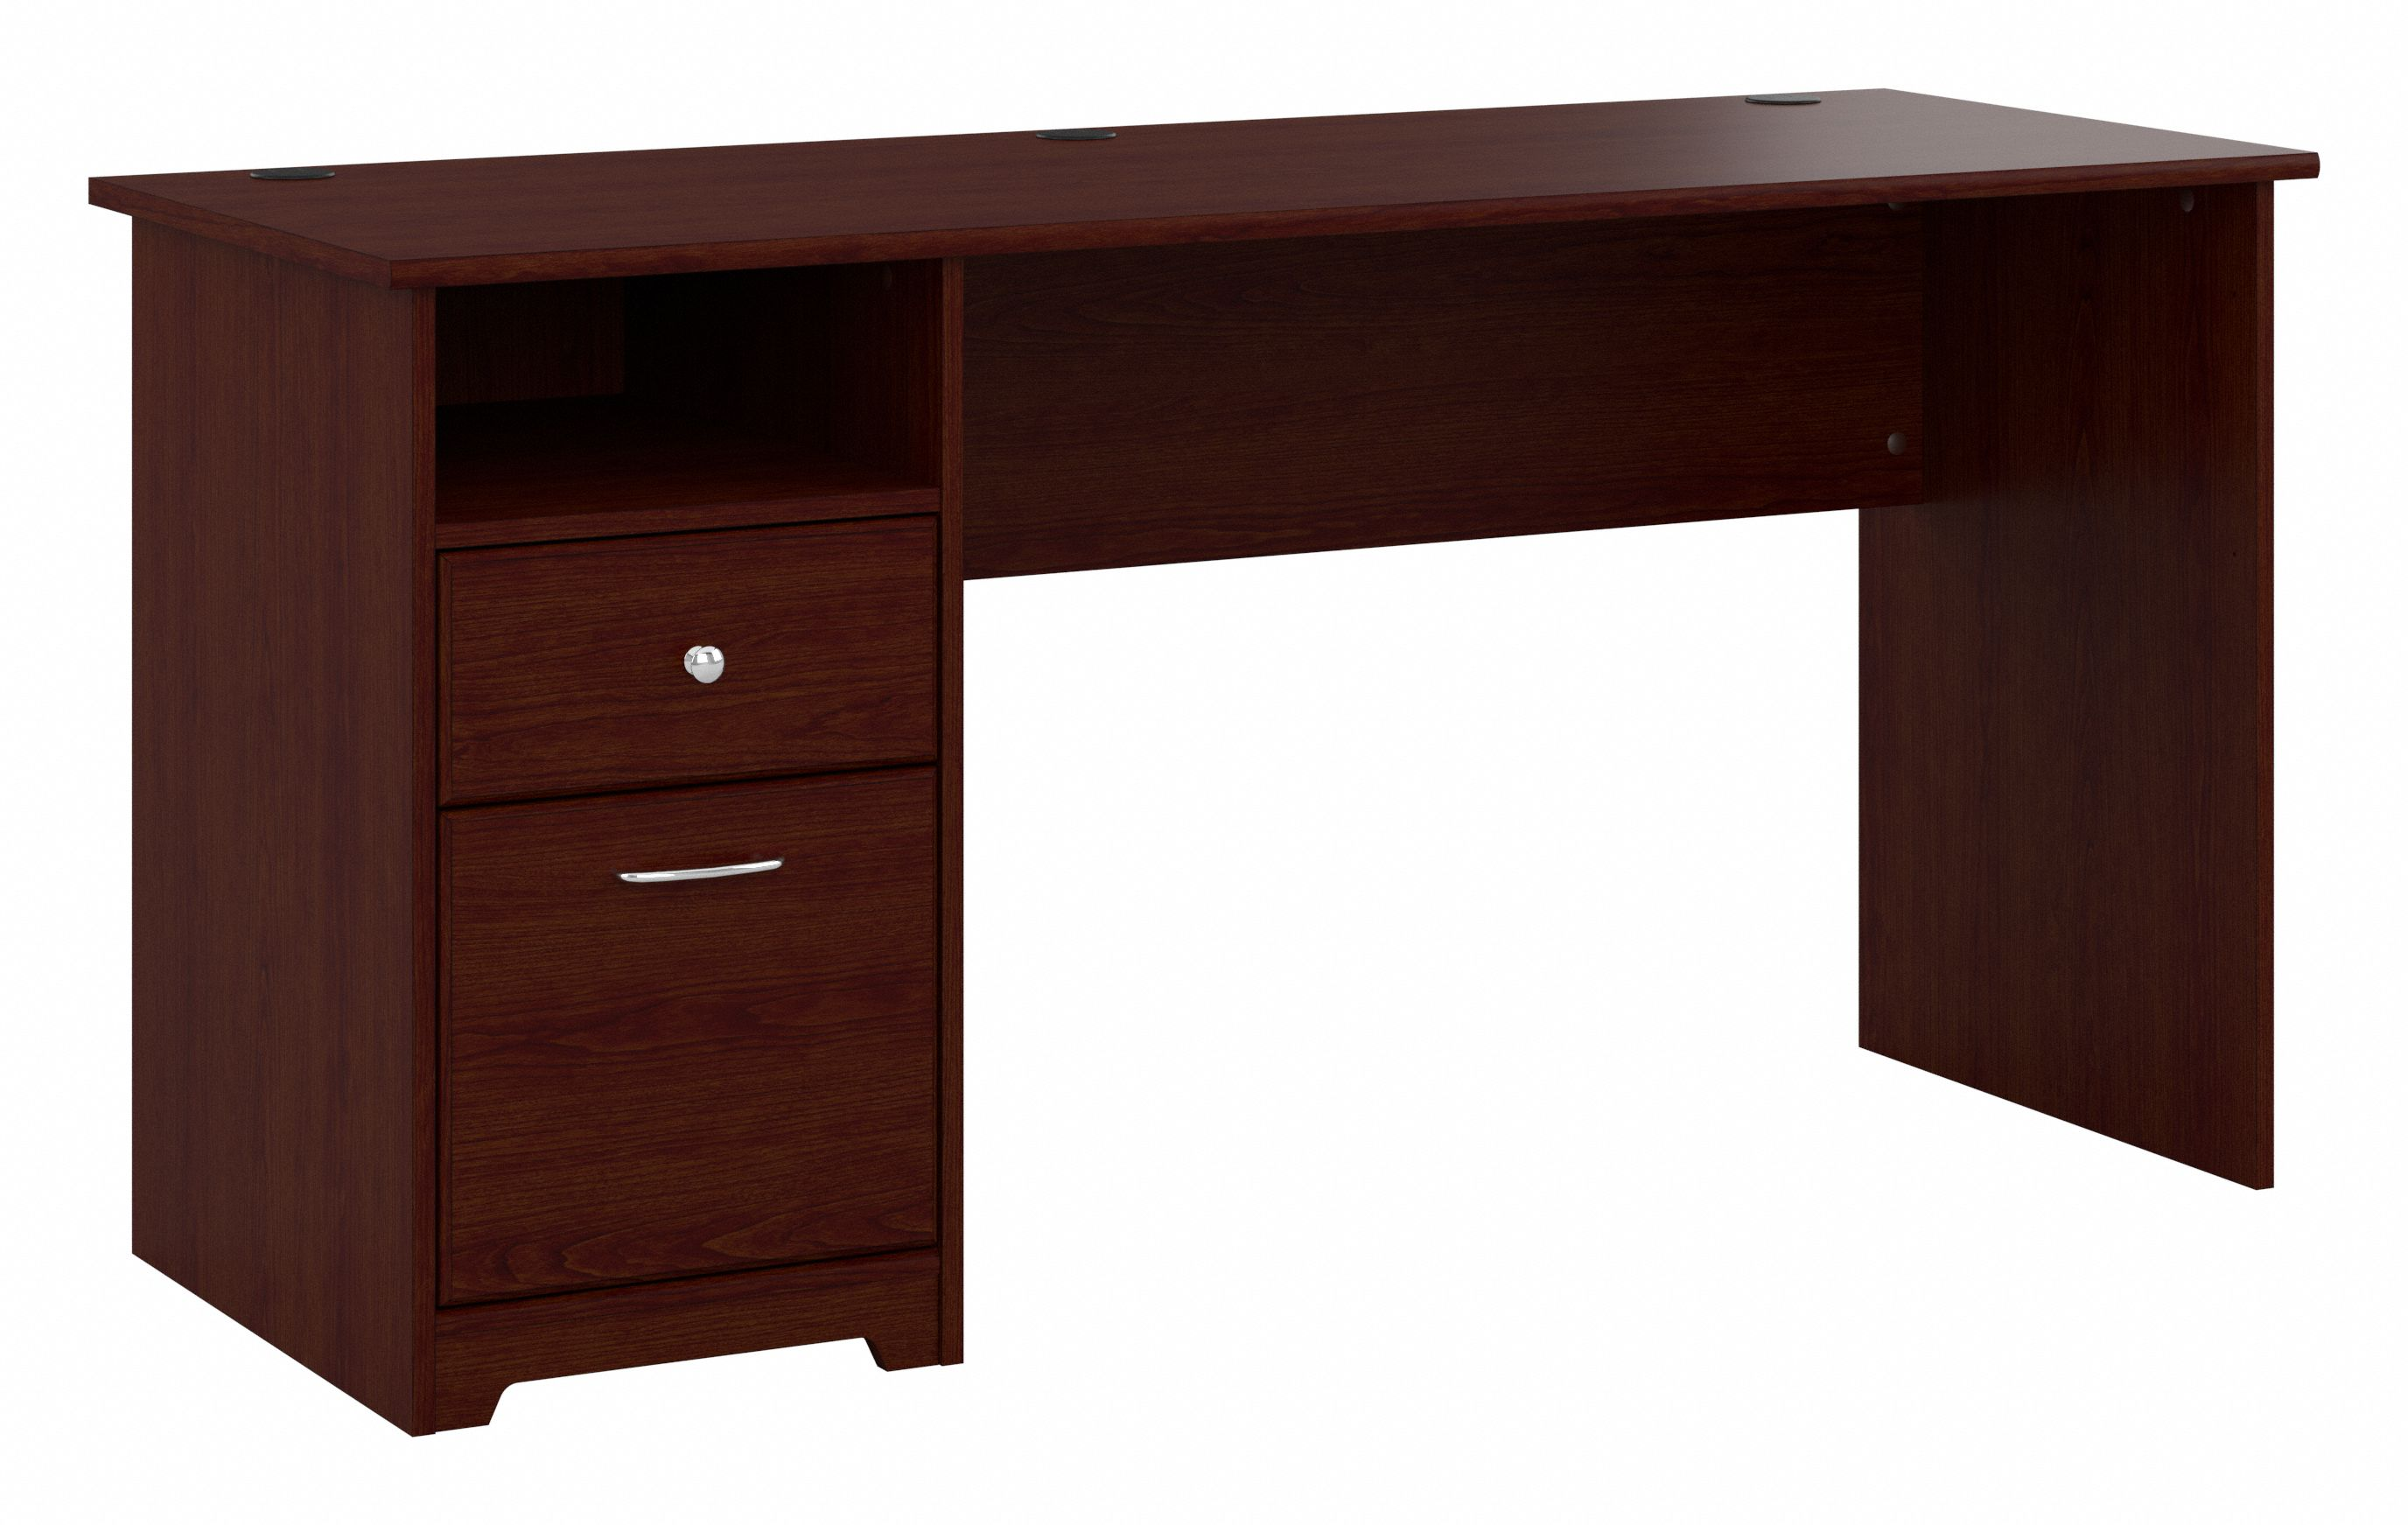 Shop Bush Furniture Cabot 60W Computer Desk with Drawers 02 WC31460 #color_harvest cherry